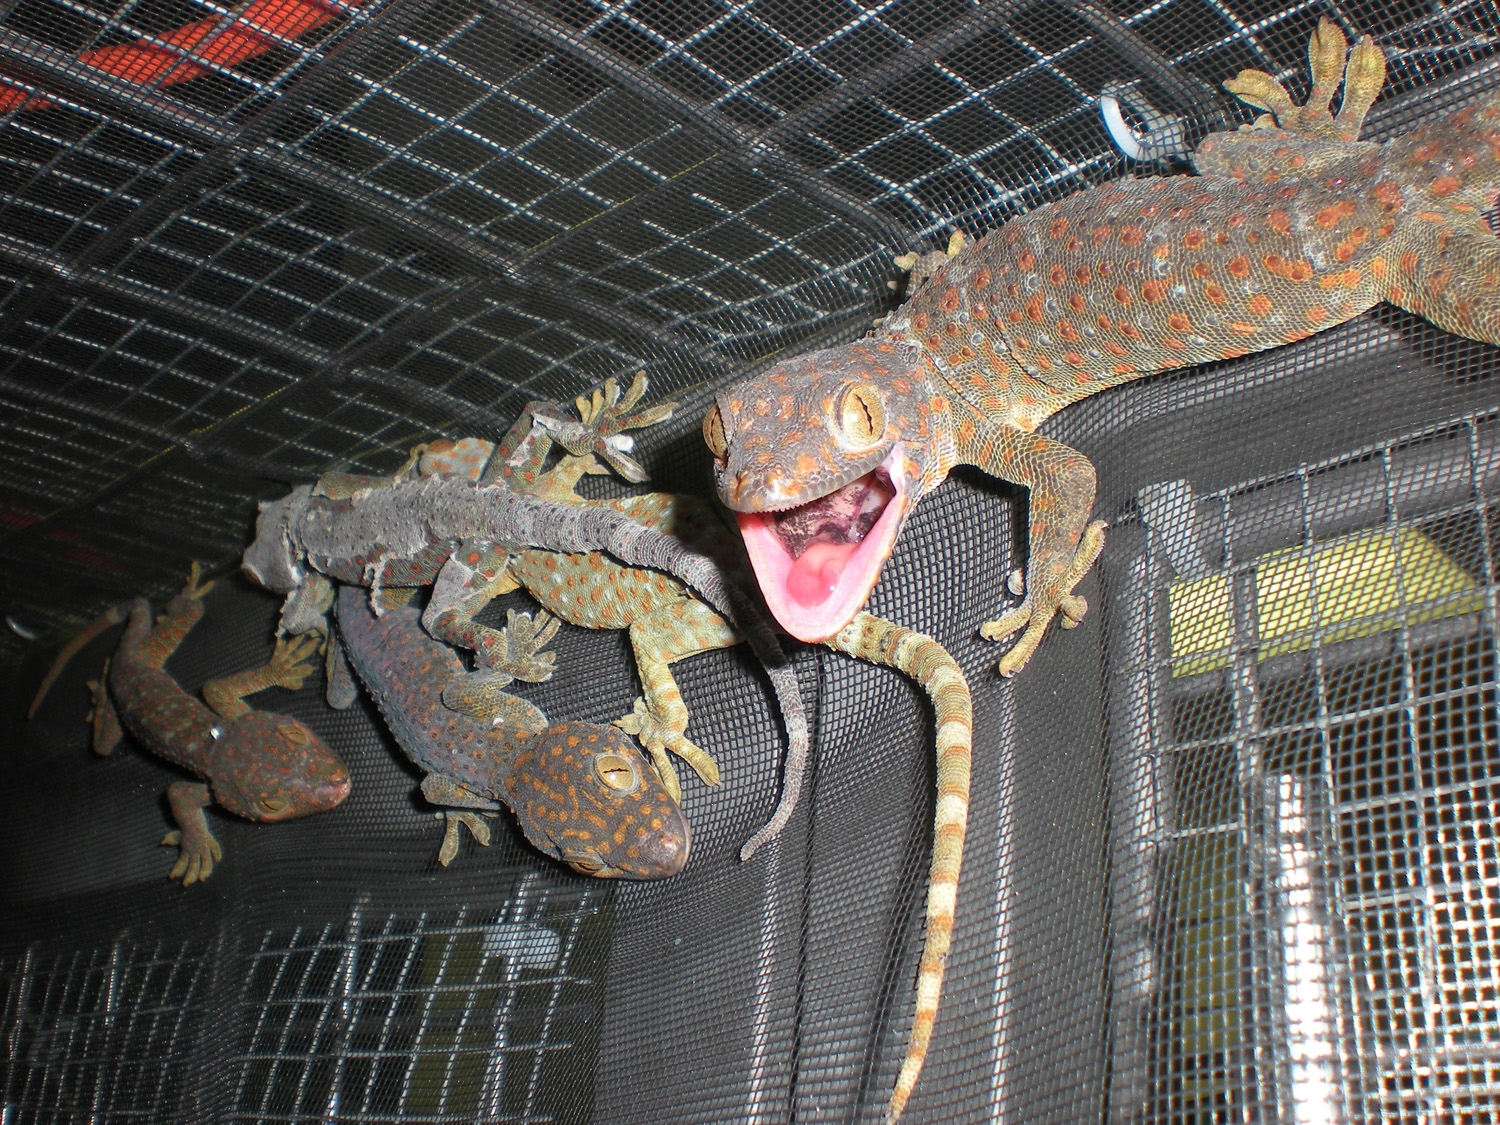 tokay gecko pet